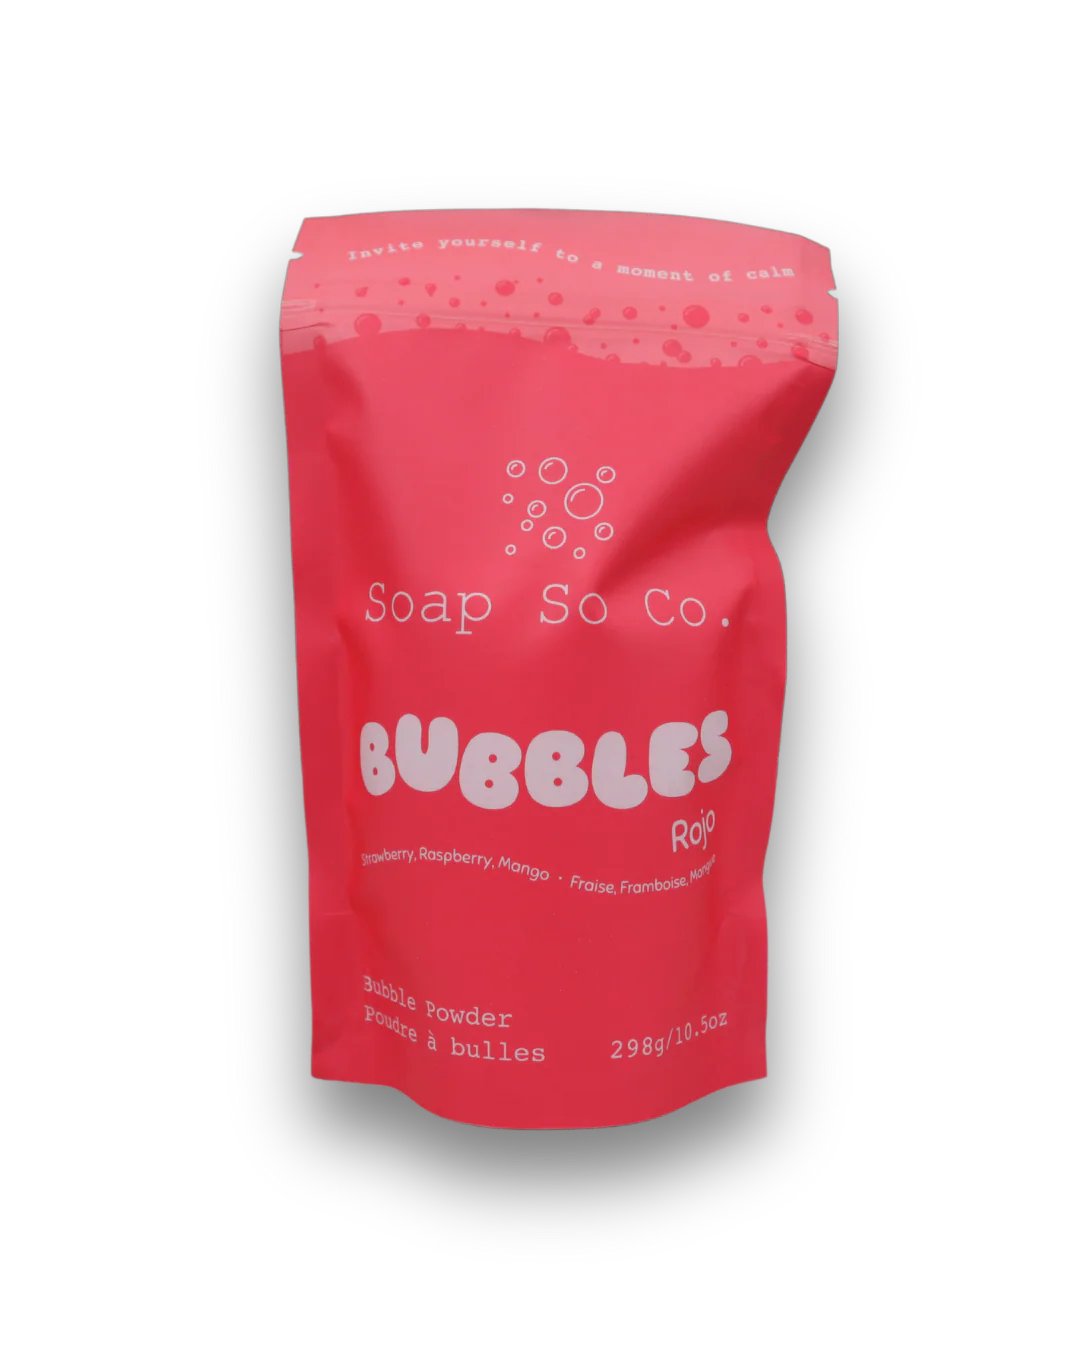 Soap So Co. - Rojo Bubble Powder